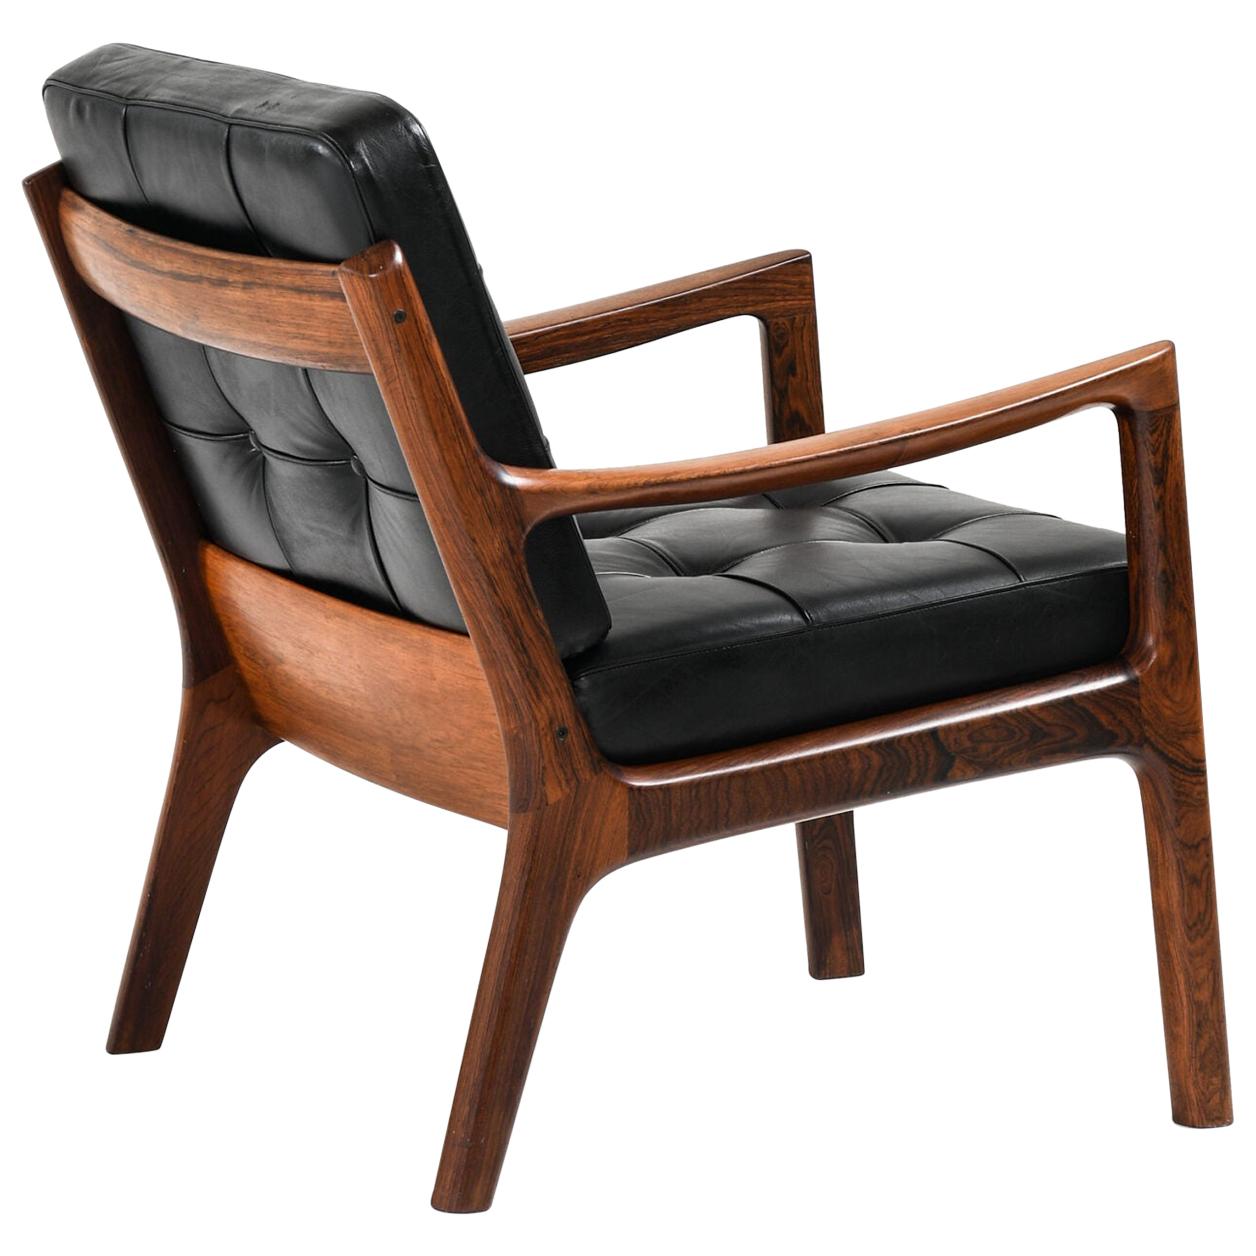 Ole Wanscher Easy Chair Model 116 / Senator Produced by France & Son in Denmark